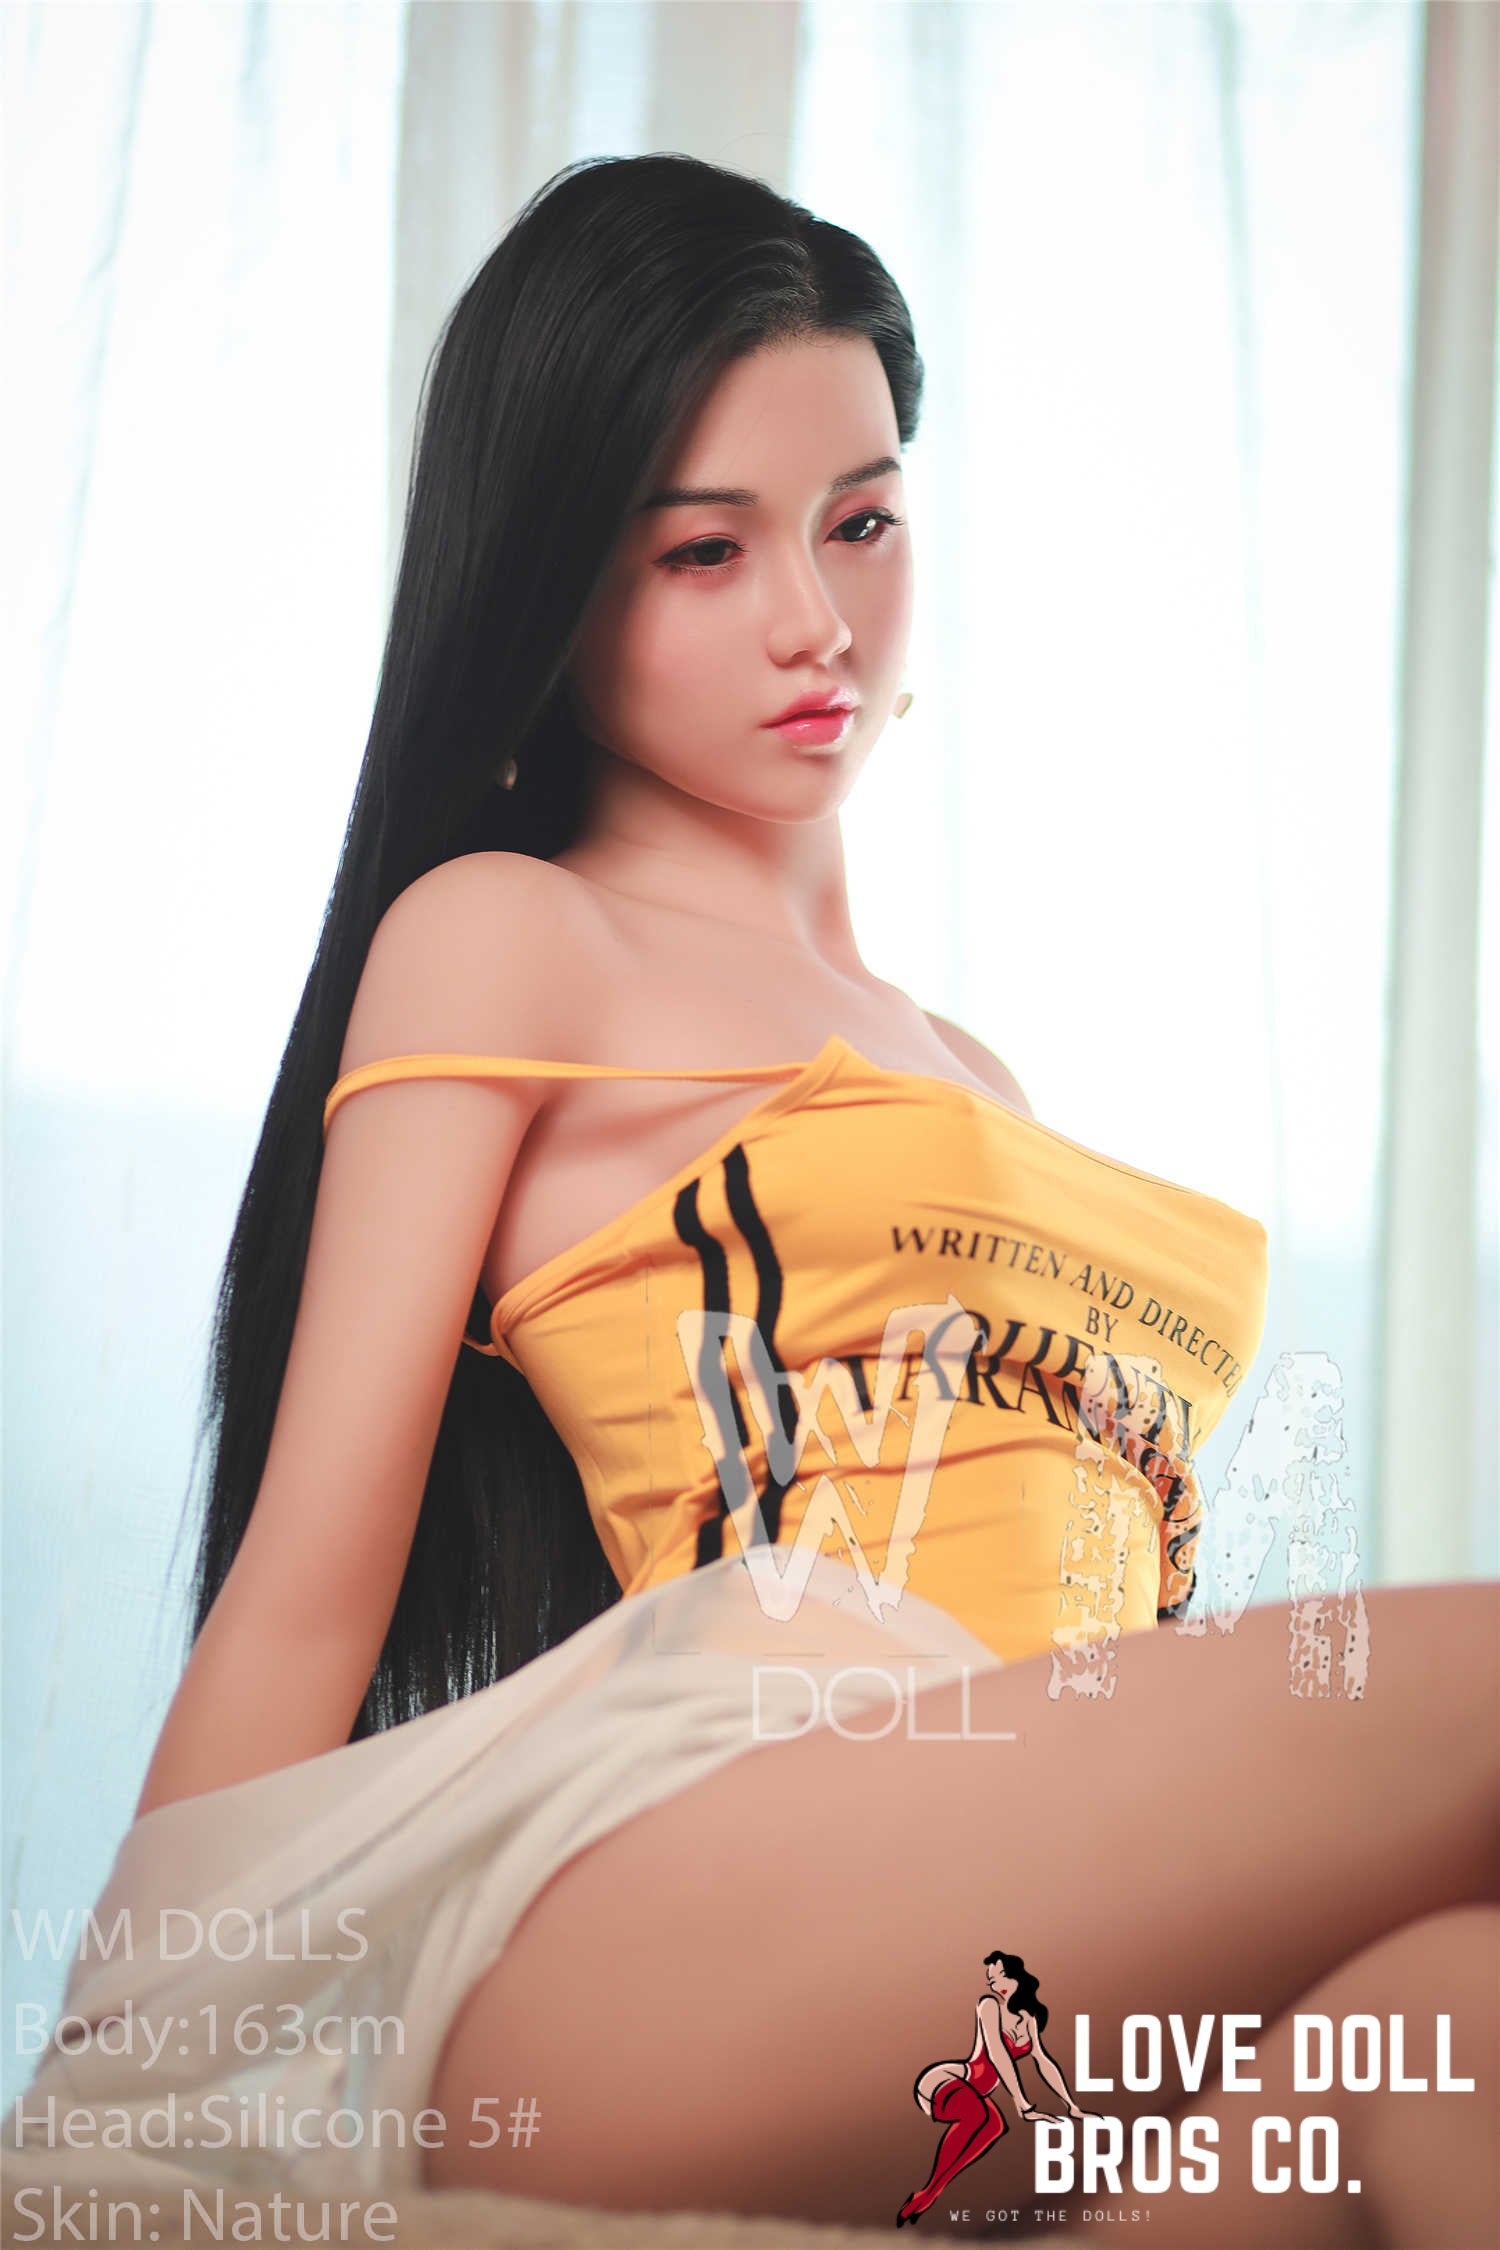 MYEONG 163CM - Love Doll Bros Co. WM Doll